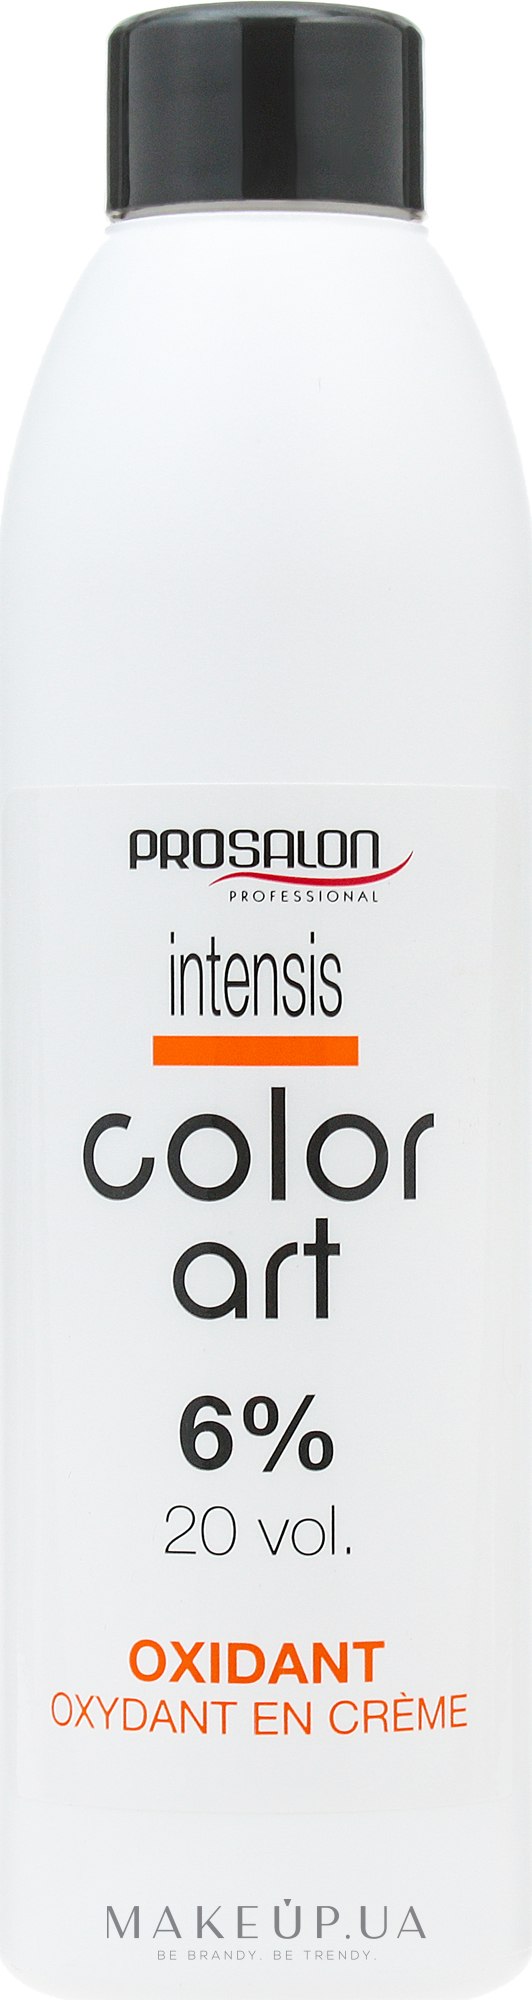 Оксидант 6% - Prosalon Intensis Color Art Oxydant vol 20 — фото 150ml